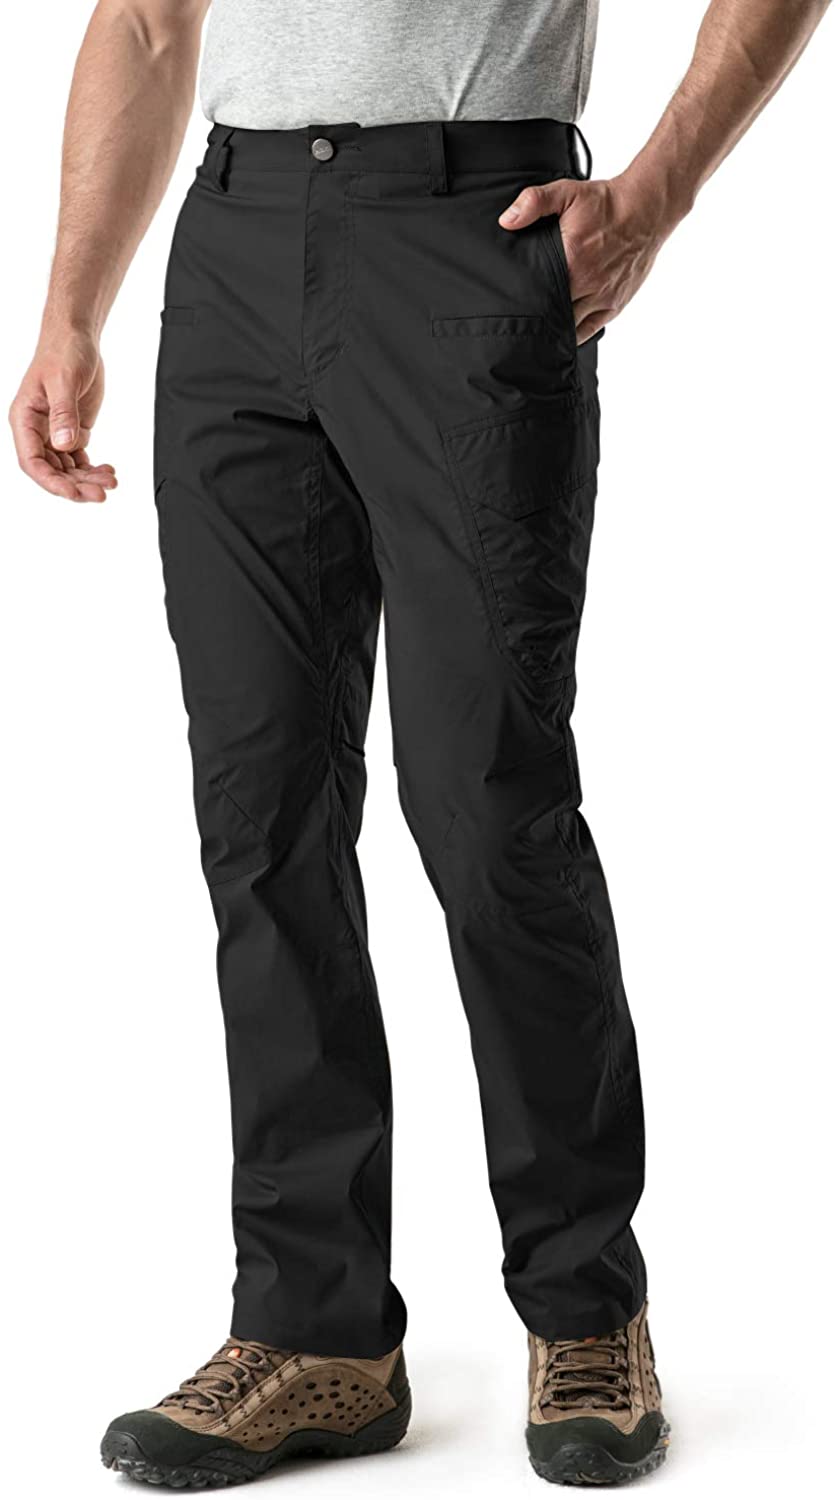 Water Resistant Hiking Pants Zip Off Lightweight Stretch UPF 50 Work Outdoor Pants CQR Men's Convertible Cargo Pants 